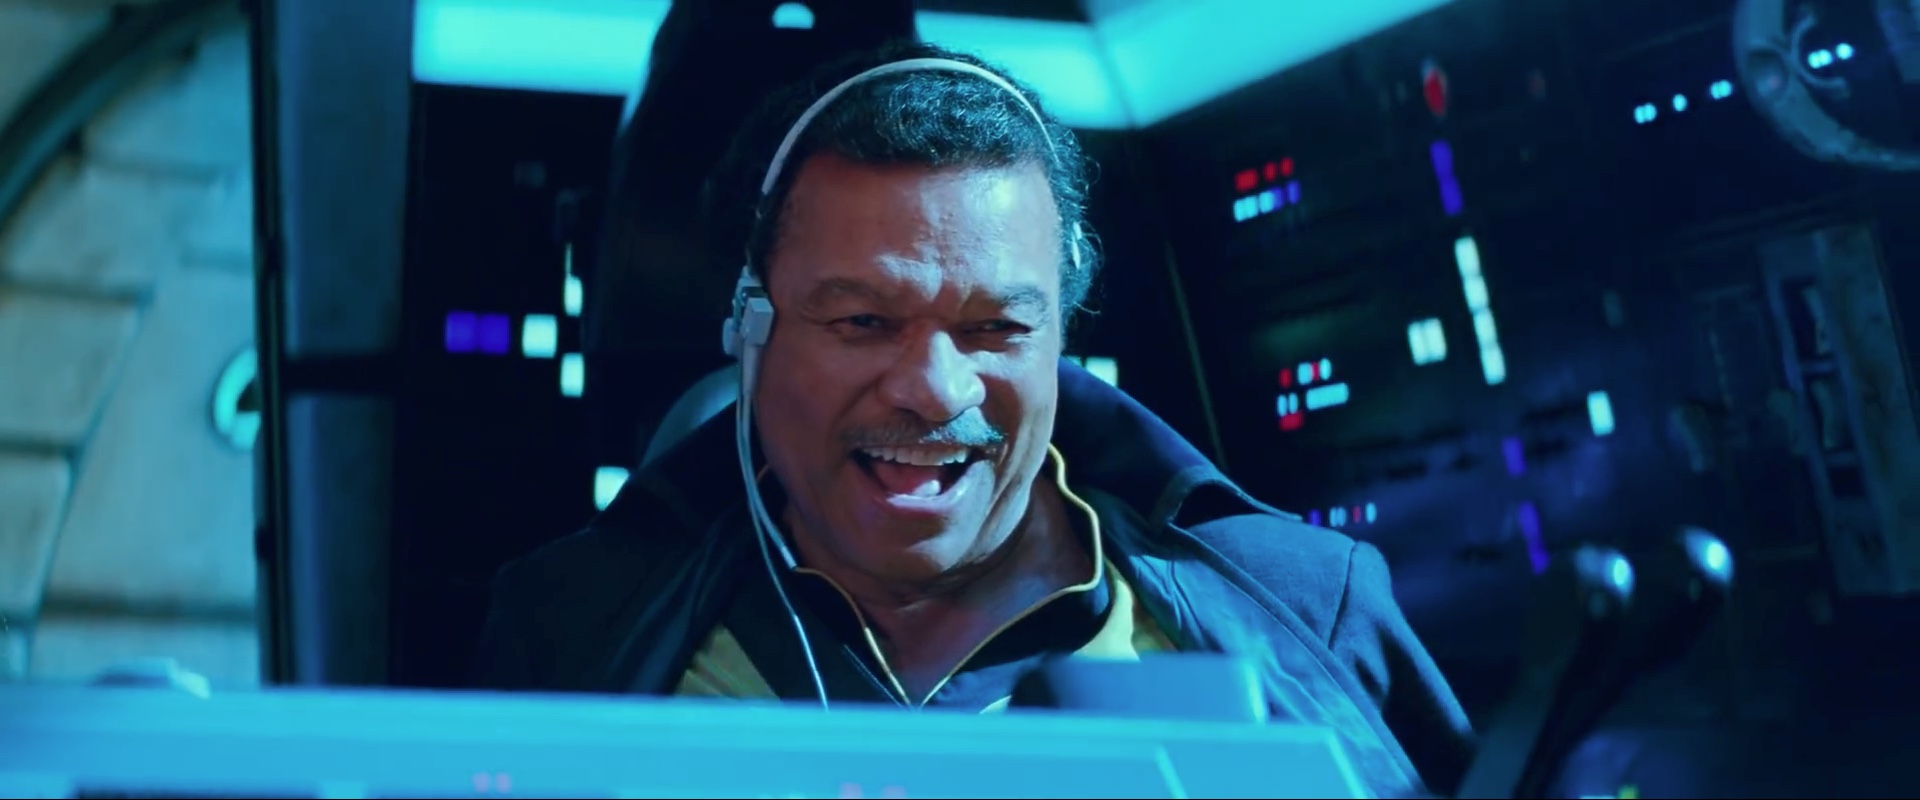 Lando Calrissian piloting the Millennium Falcon